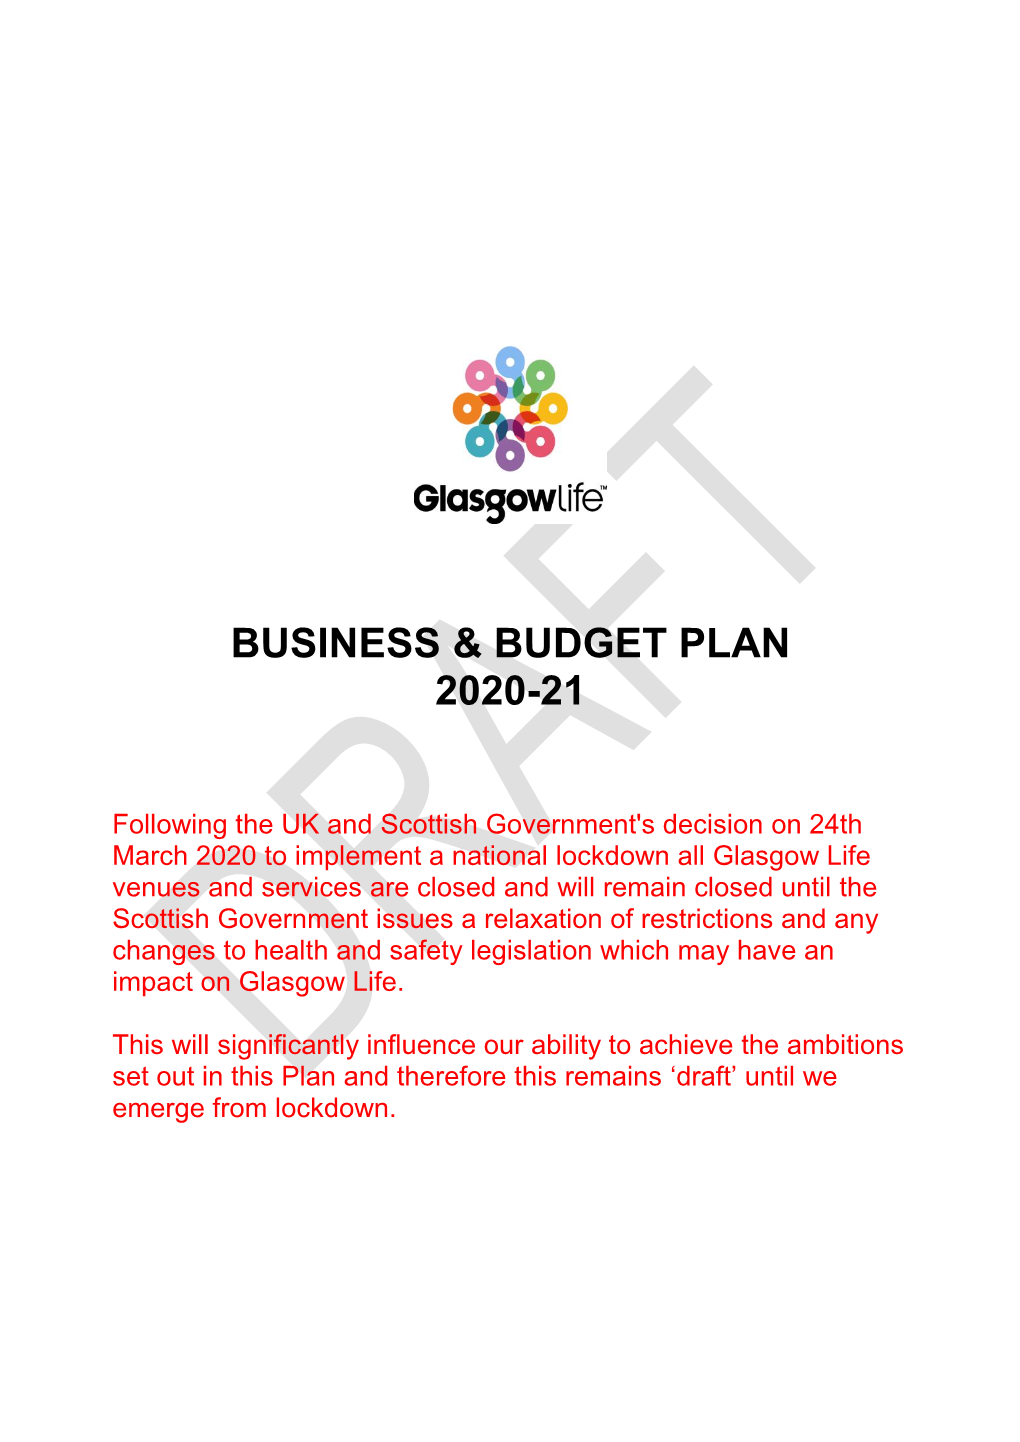 Business & Budget Plan 2020-21